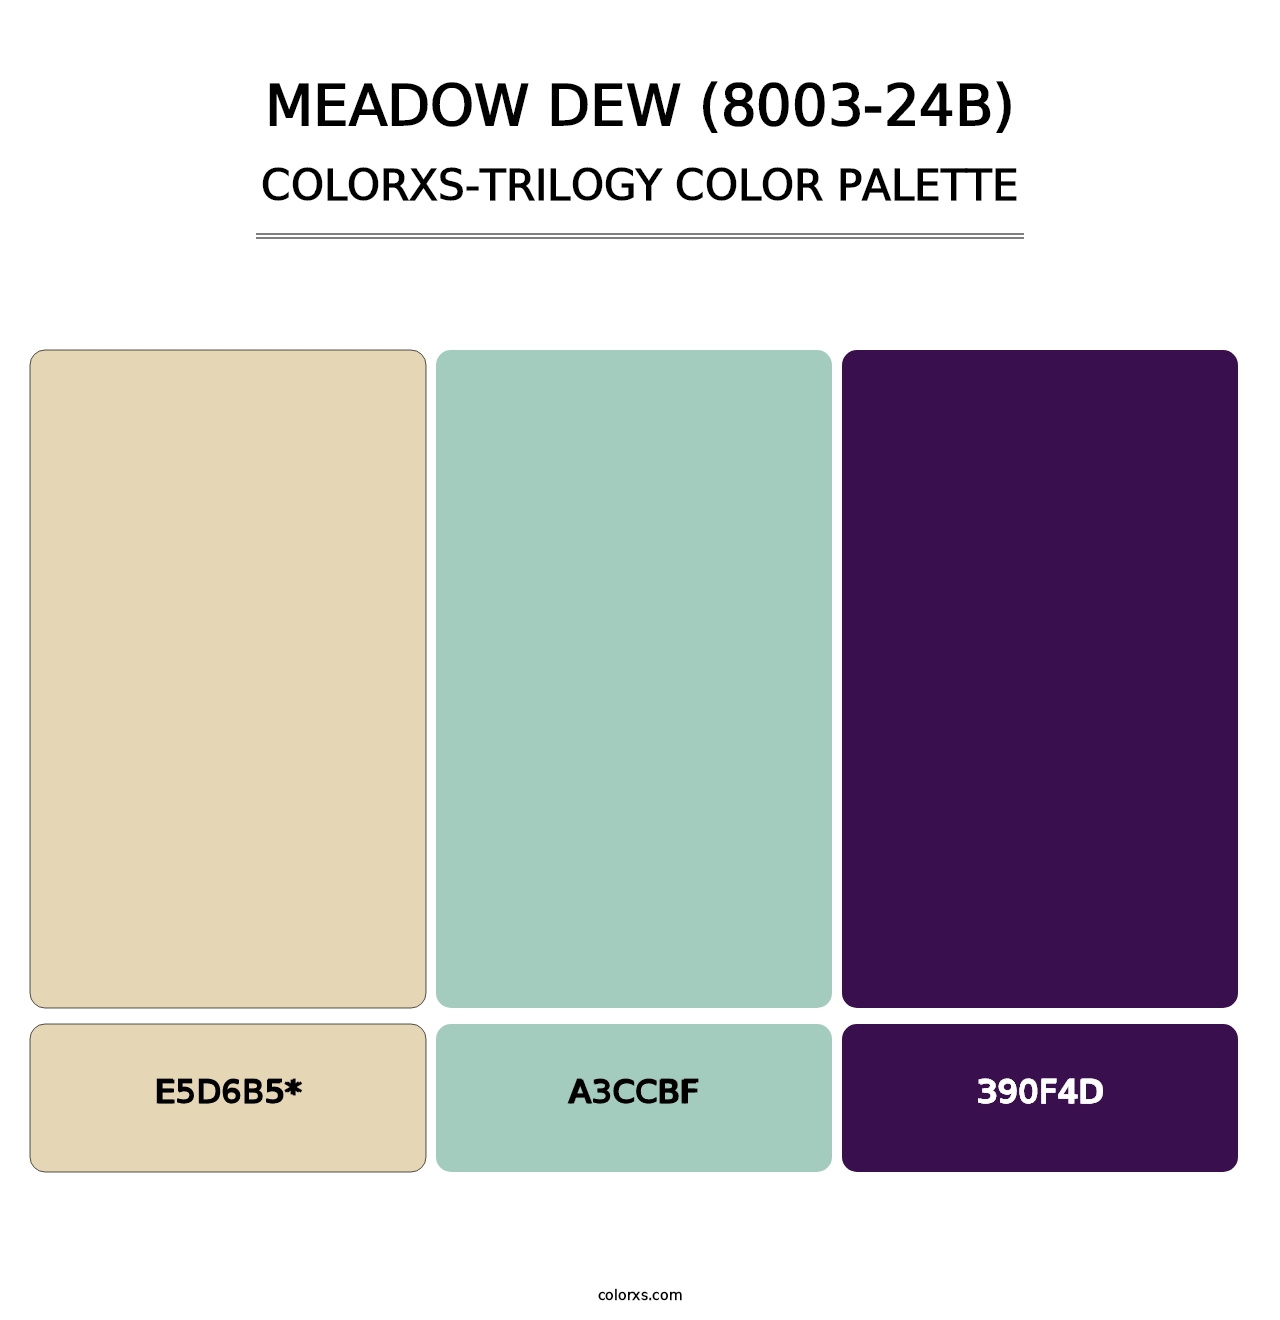 Meadow Dew (8003-24B) - Colorxs Trilogy Palette